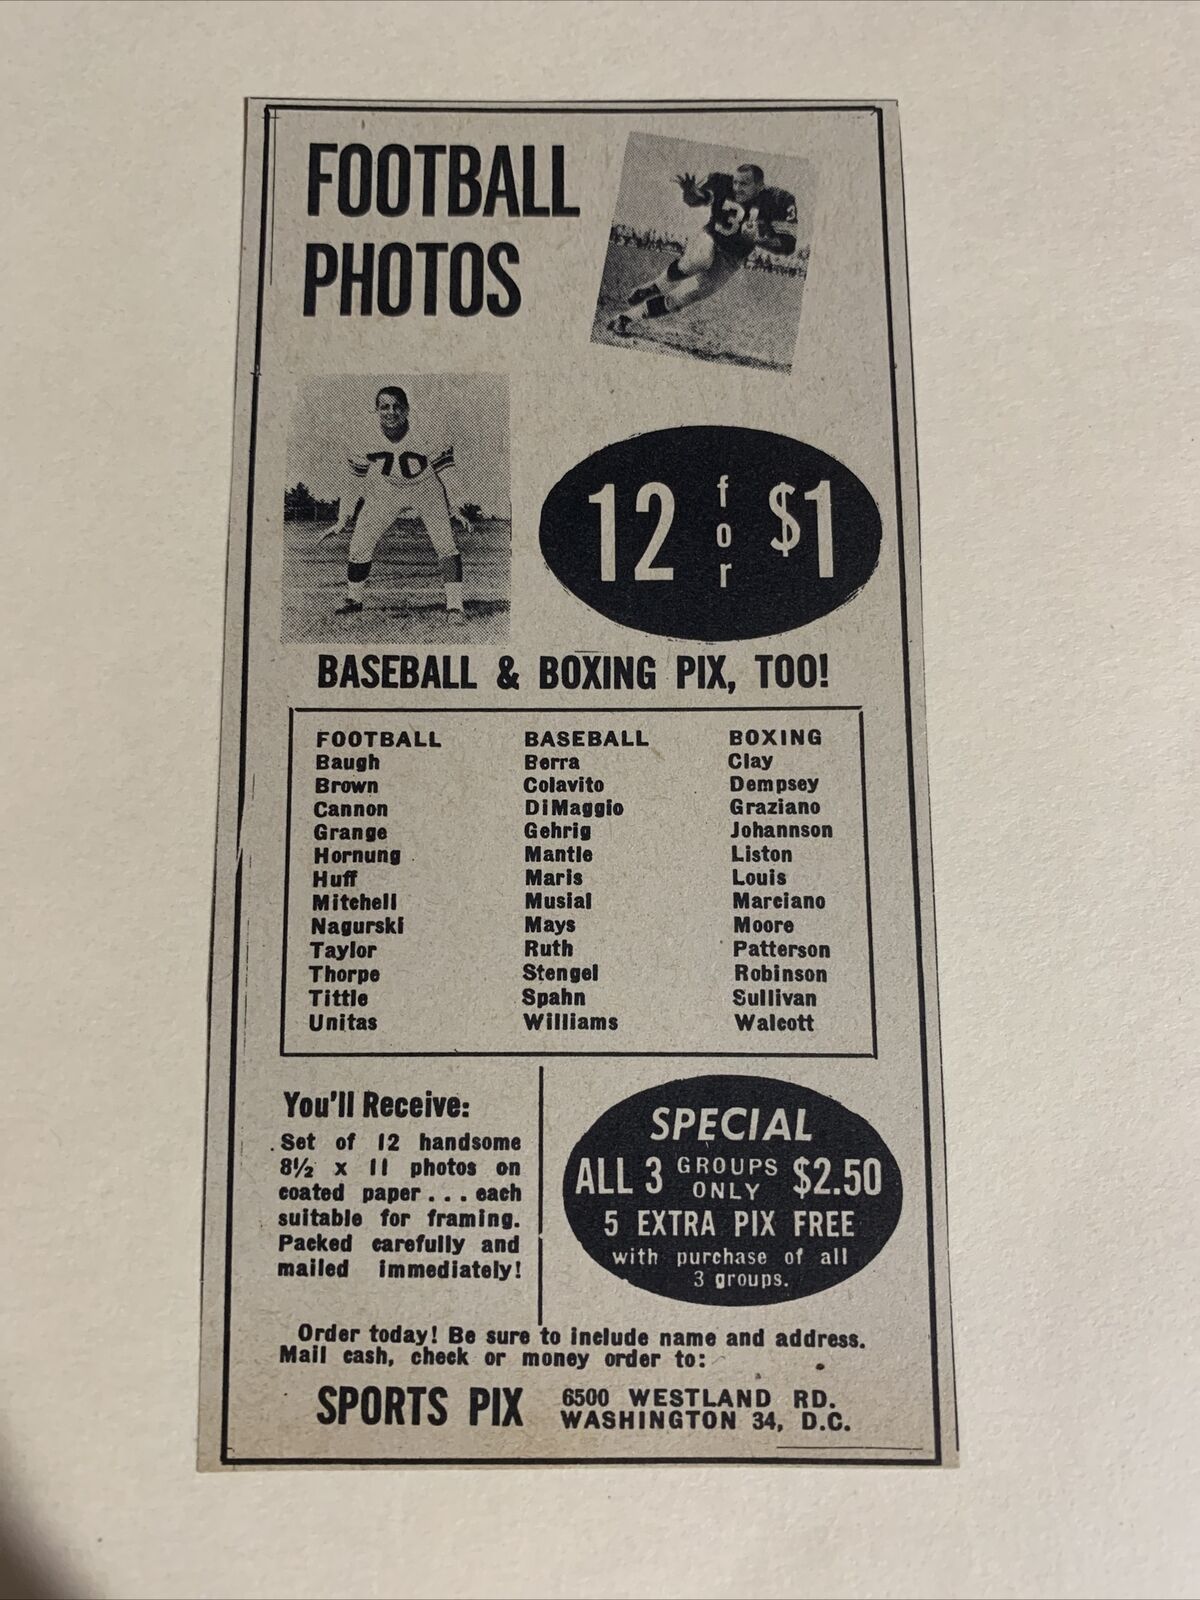 Sports Pix Football Baseball Photos Washington D.C. 1963 S&S Pictorial CO Ad